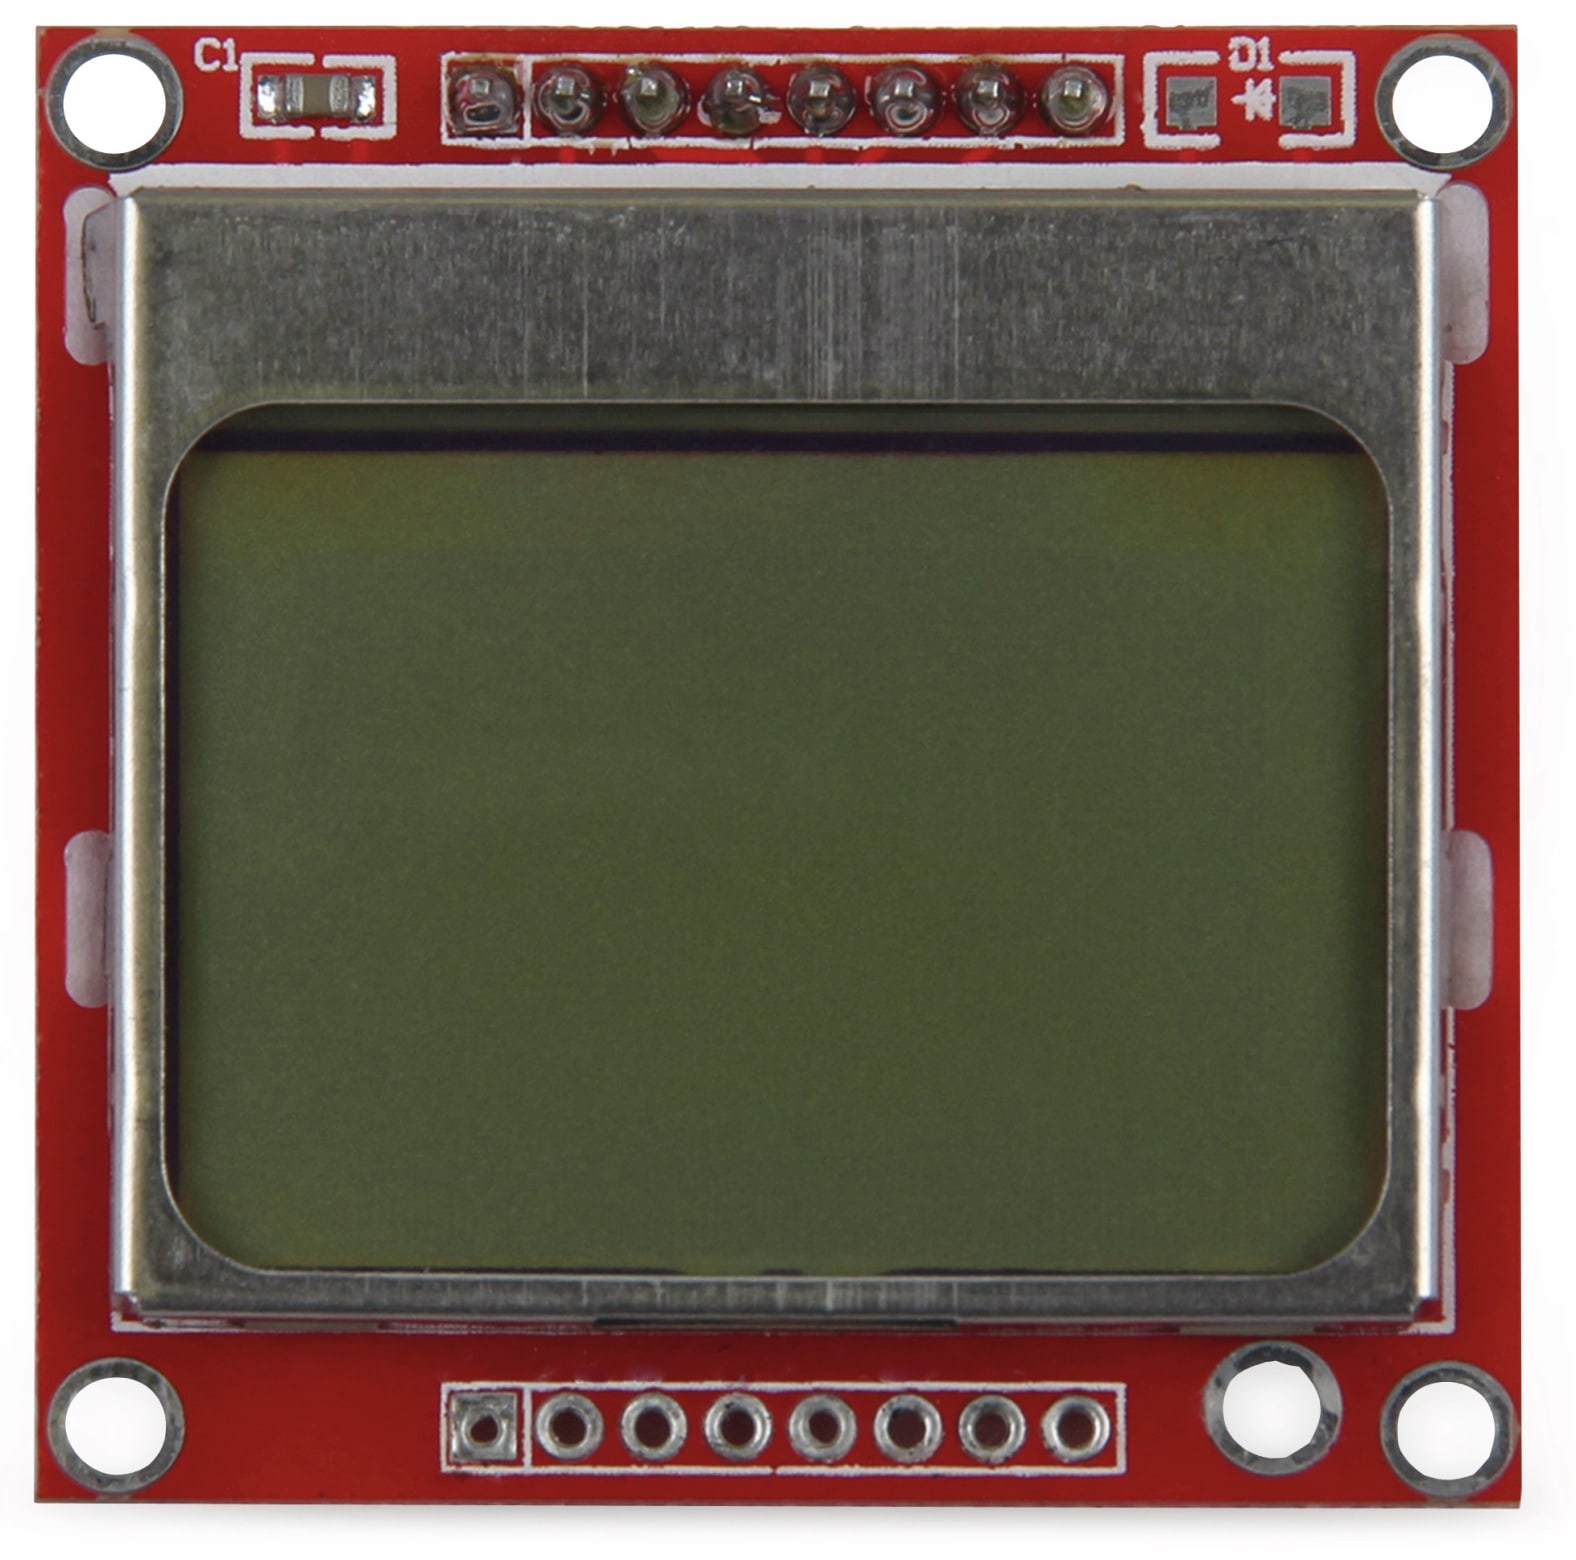 JOY-IT LCD Display 84x48 Pixel